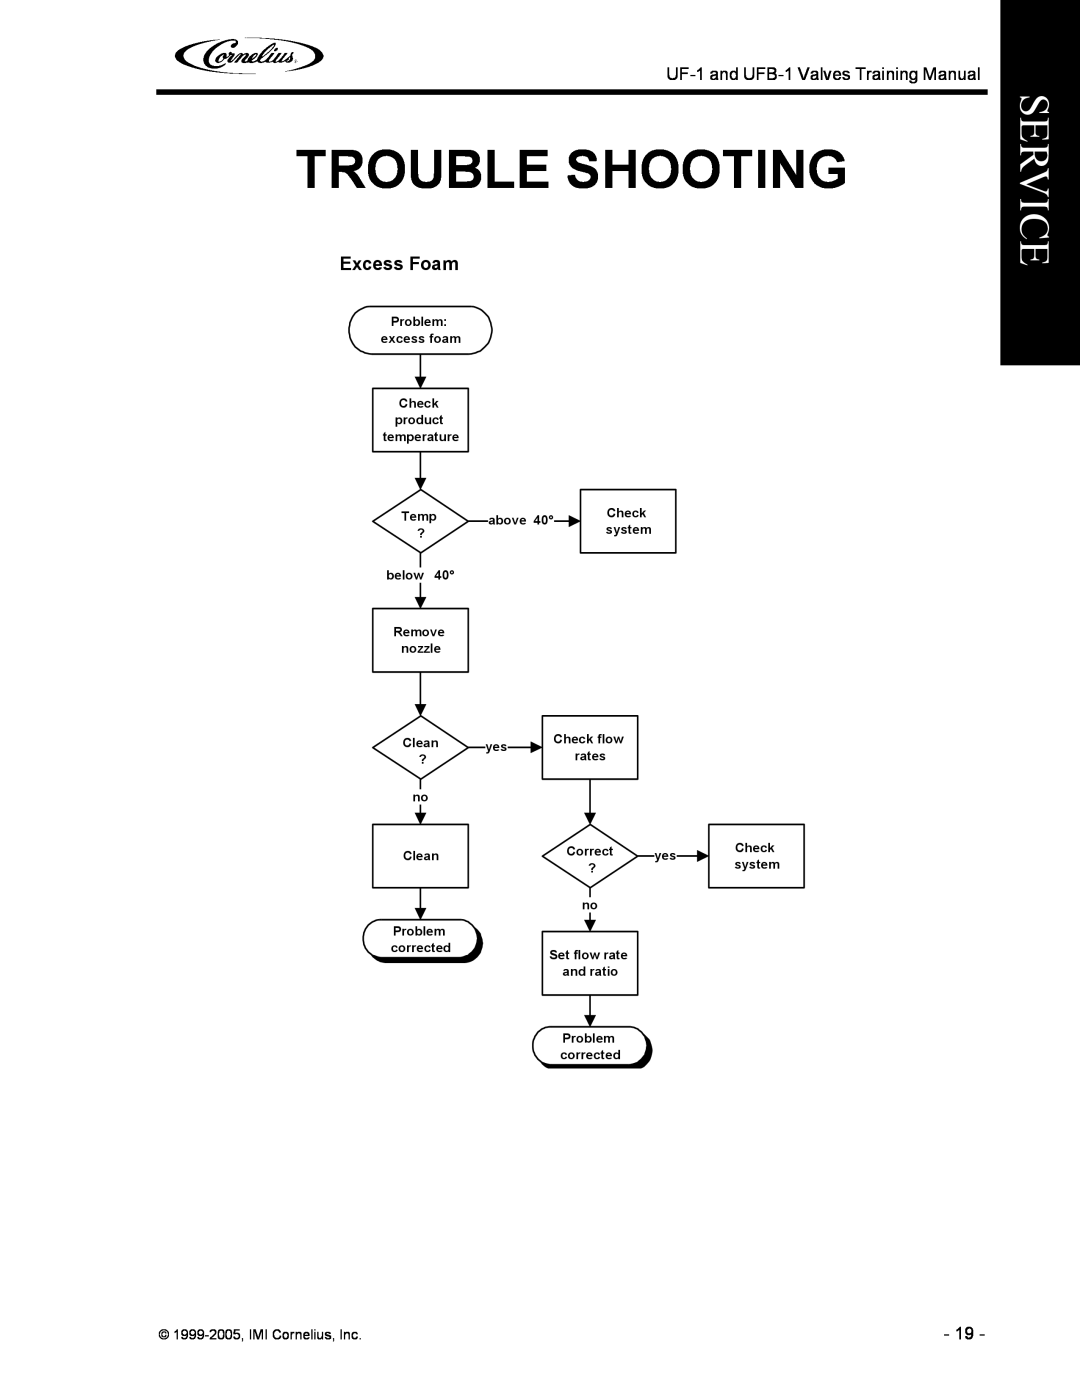 Cornelius UF-1, UFB-1 manual Trouble Shooting, Service, Excess Foam, 1999-2005,IMI Cornelius, Inc 